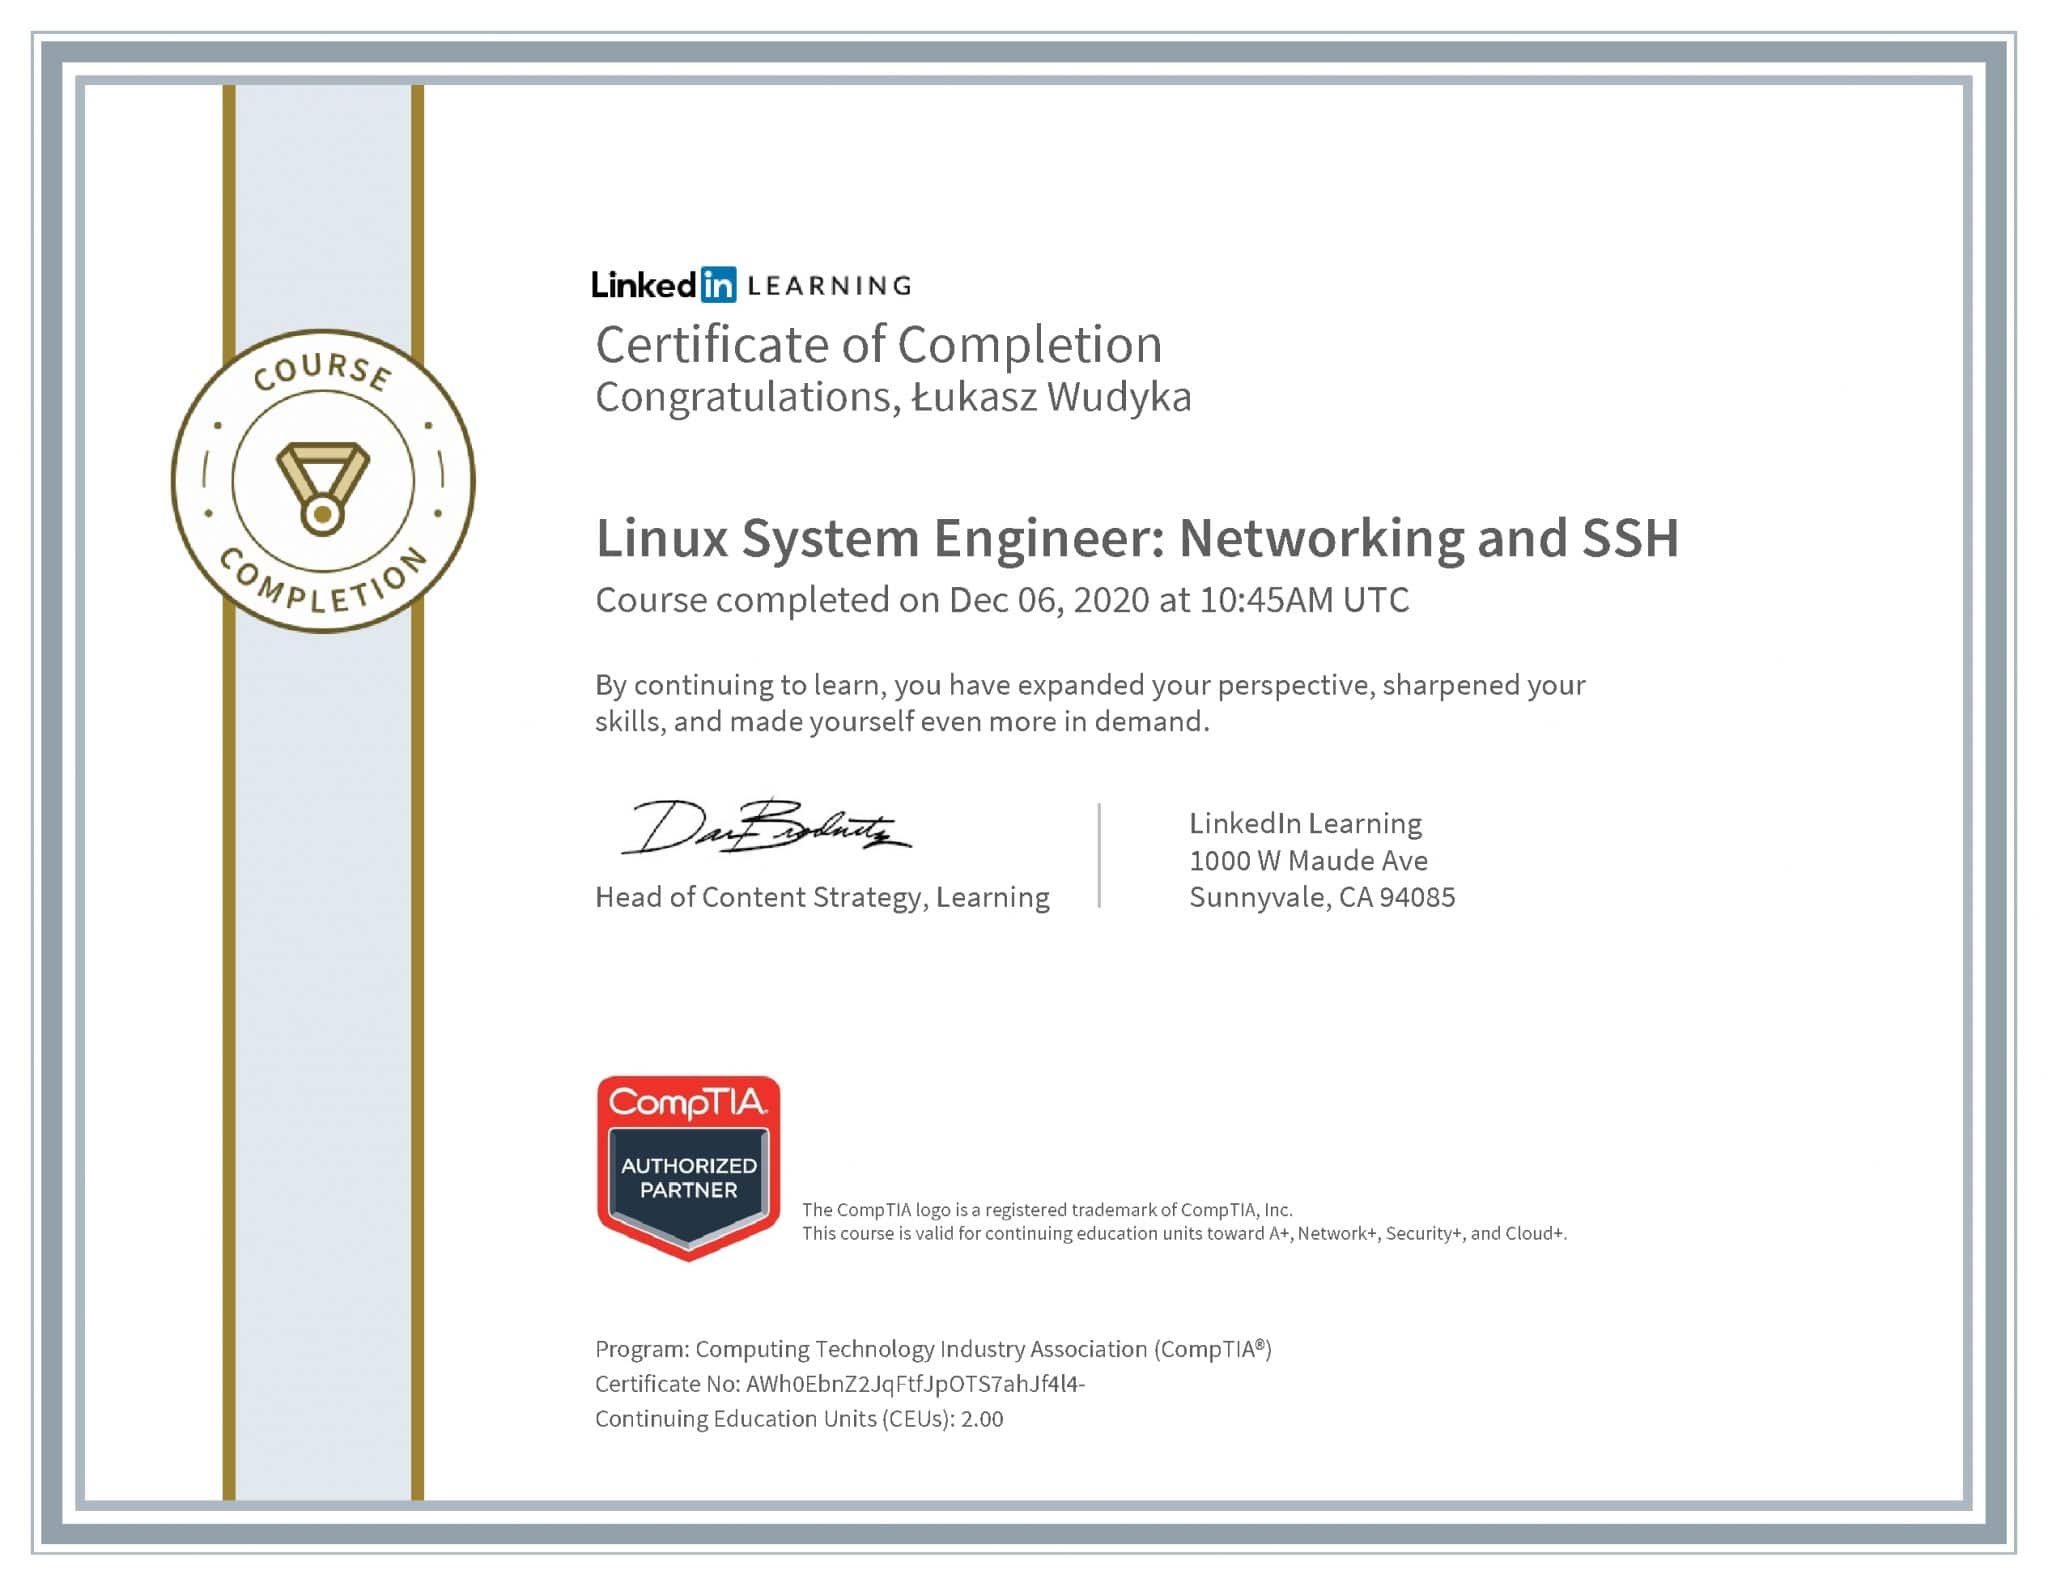 Łukasz Wudyka certyfikat LinkedIn Linux System Engineer: Networking and SSH CompTIA